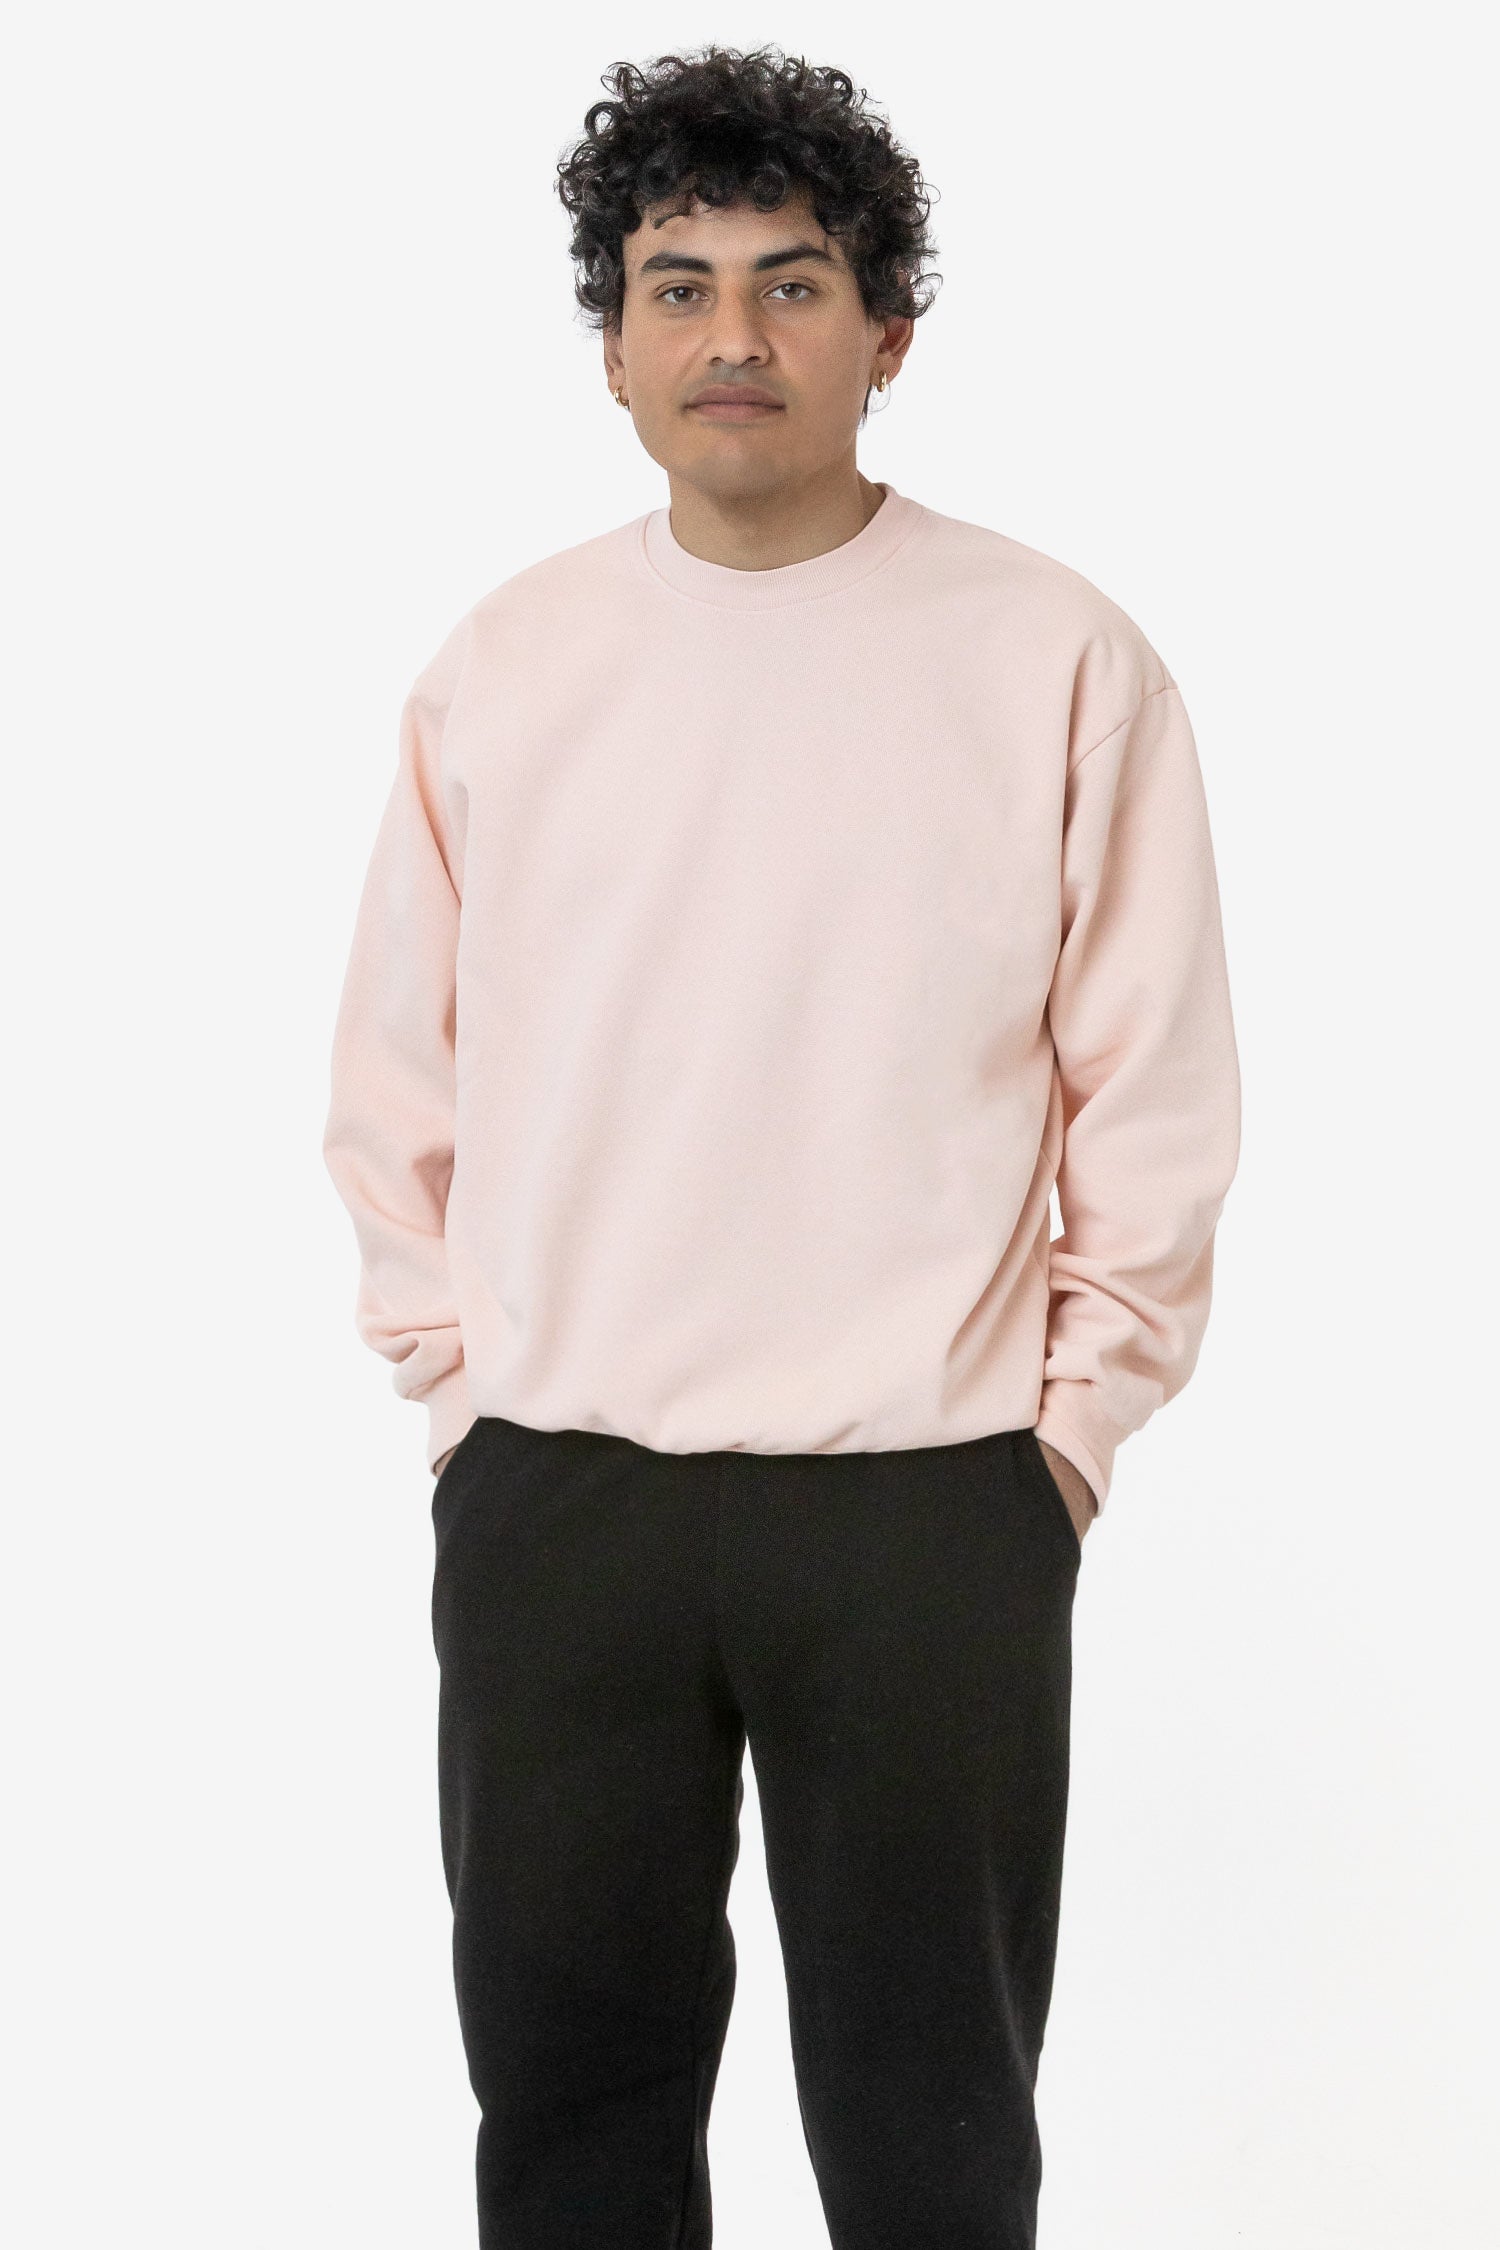 Los Angeles Apparel | Garment Dye Heavy Fleece Sweatpant (New & Now) for Men in Seashell Pink, Size Small